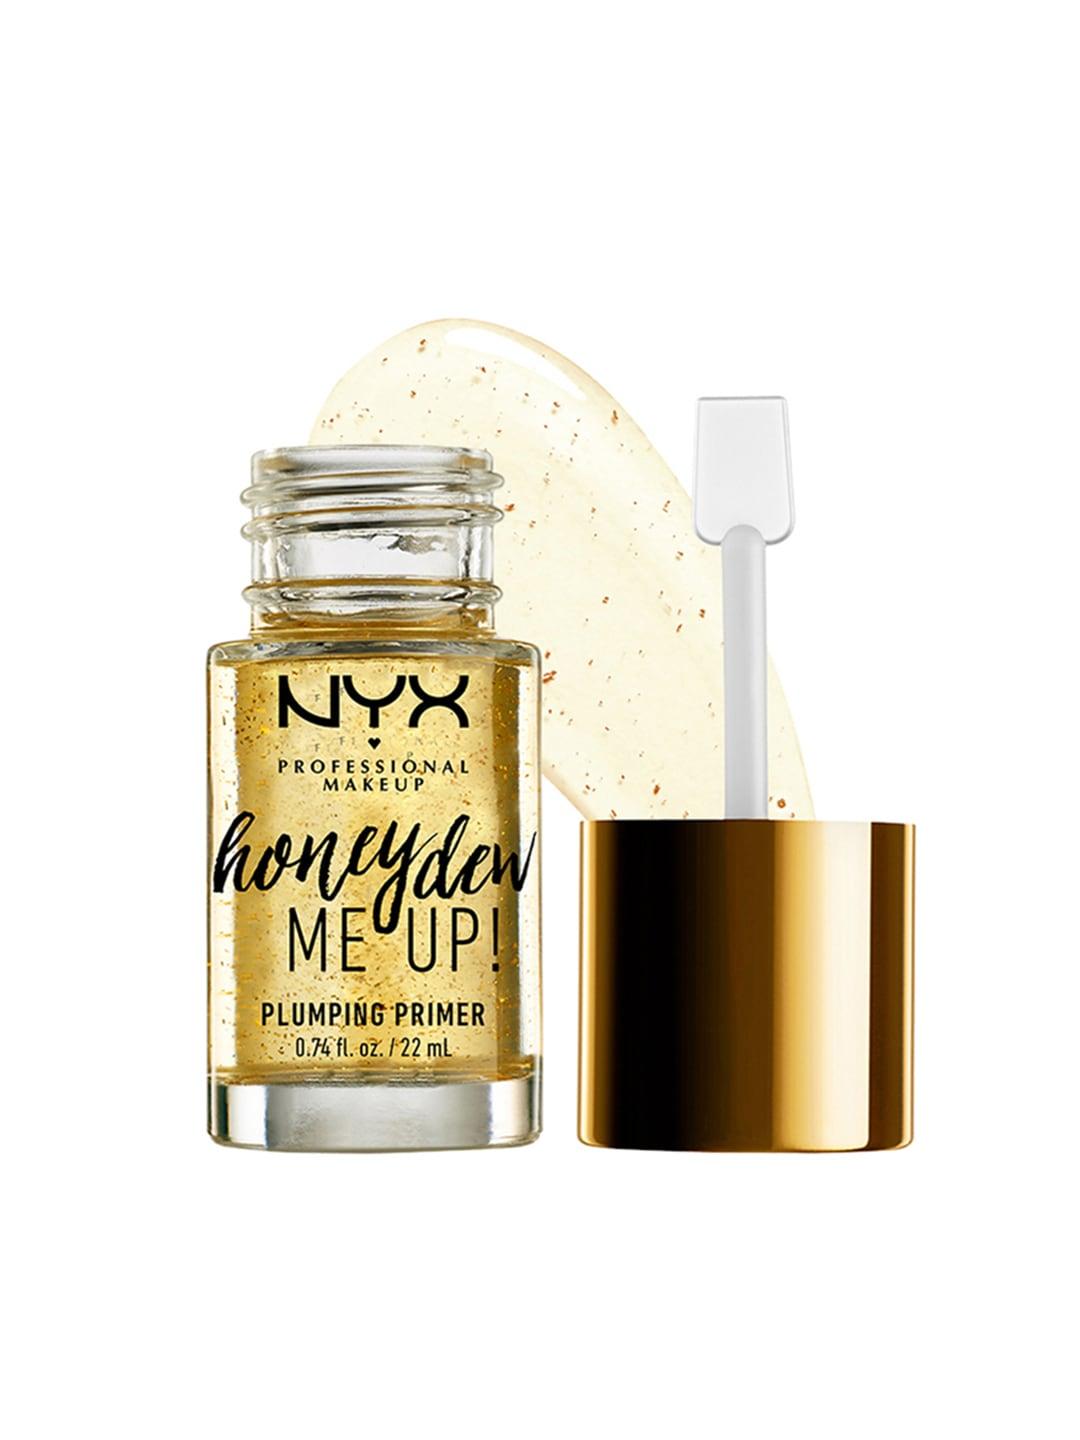 nyx professional makeup honey dew me up plumping primer - 22 ml